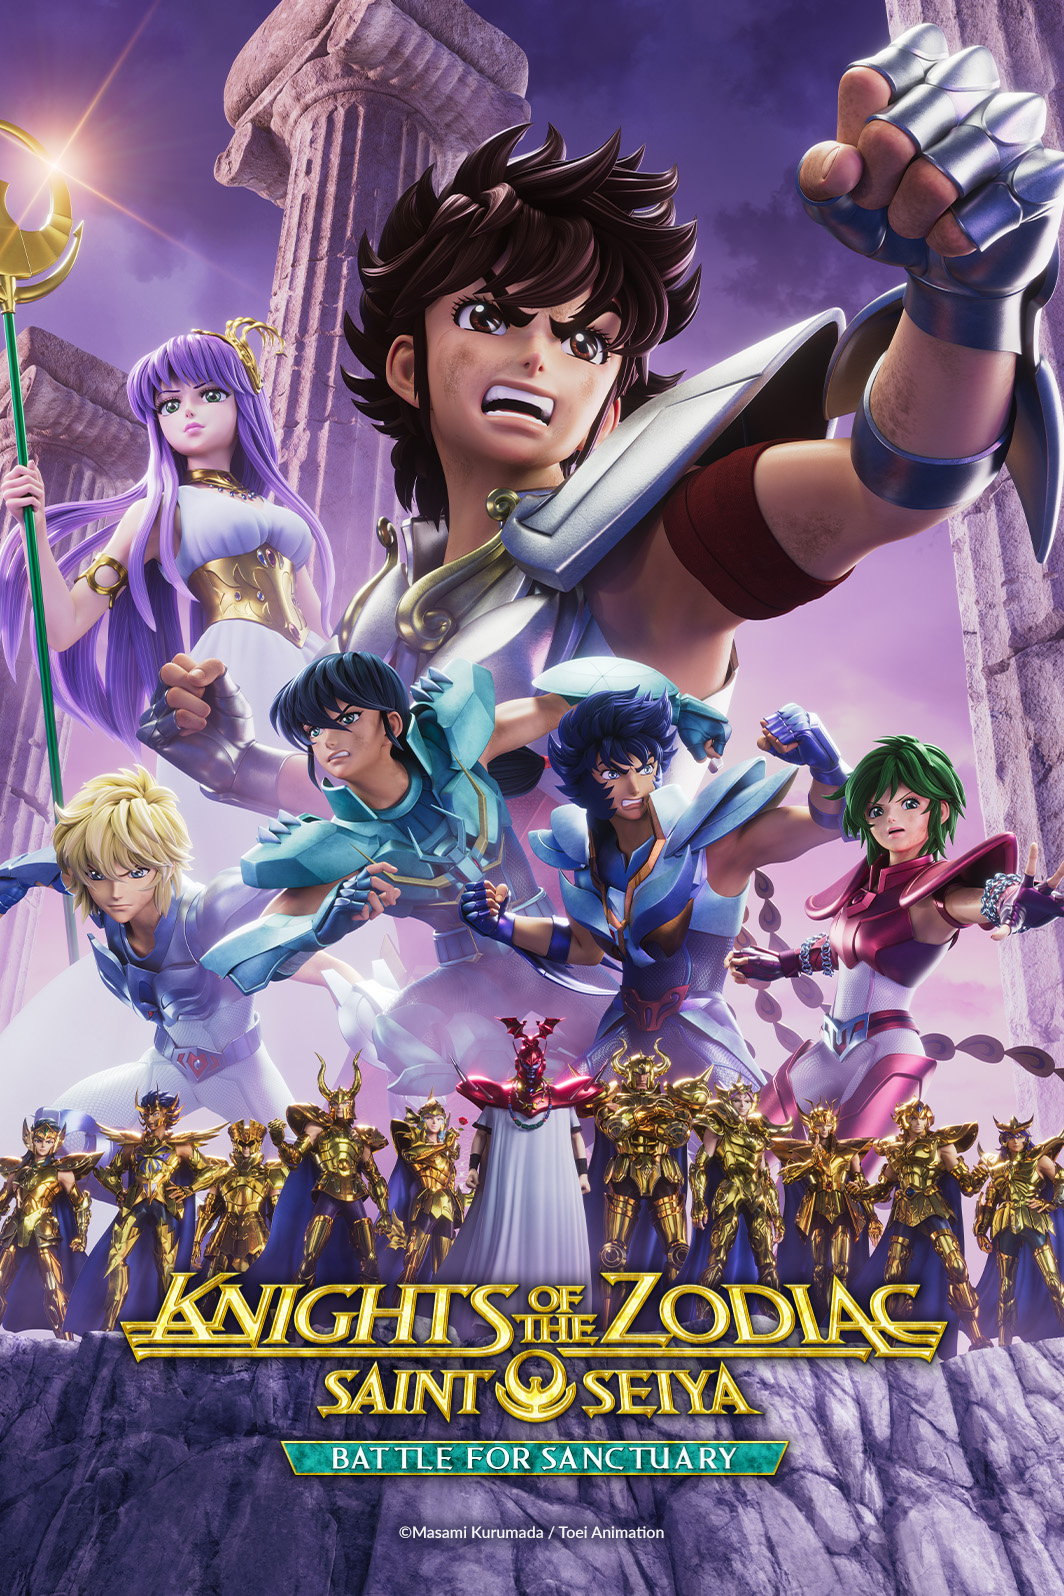 Saint Seiya: Knights of the Zodiac - Battle for Sanctuary - anime visual